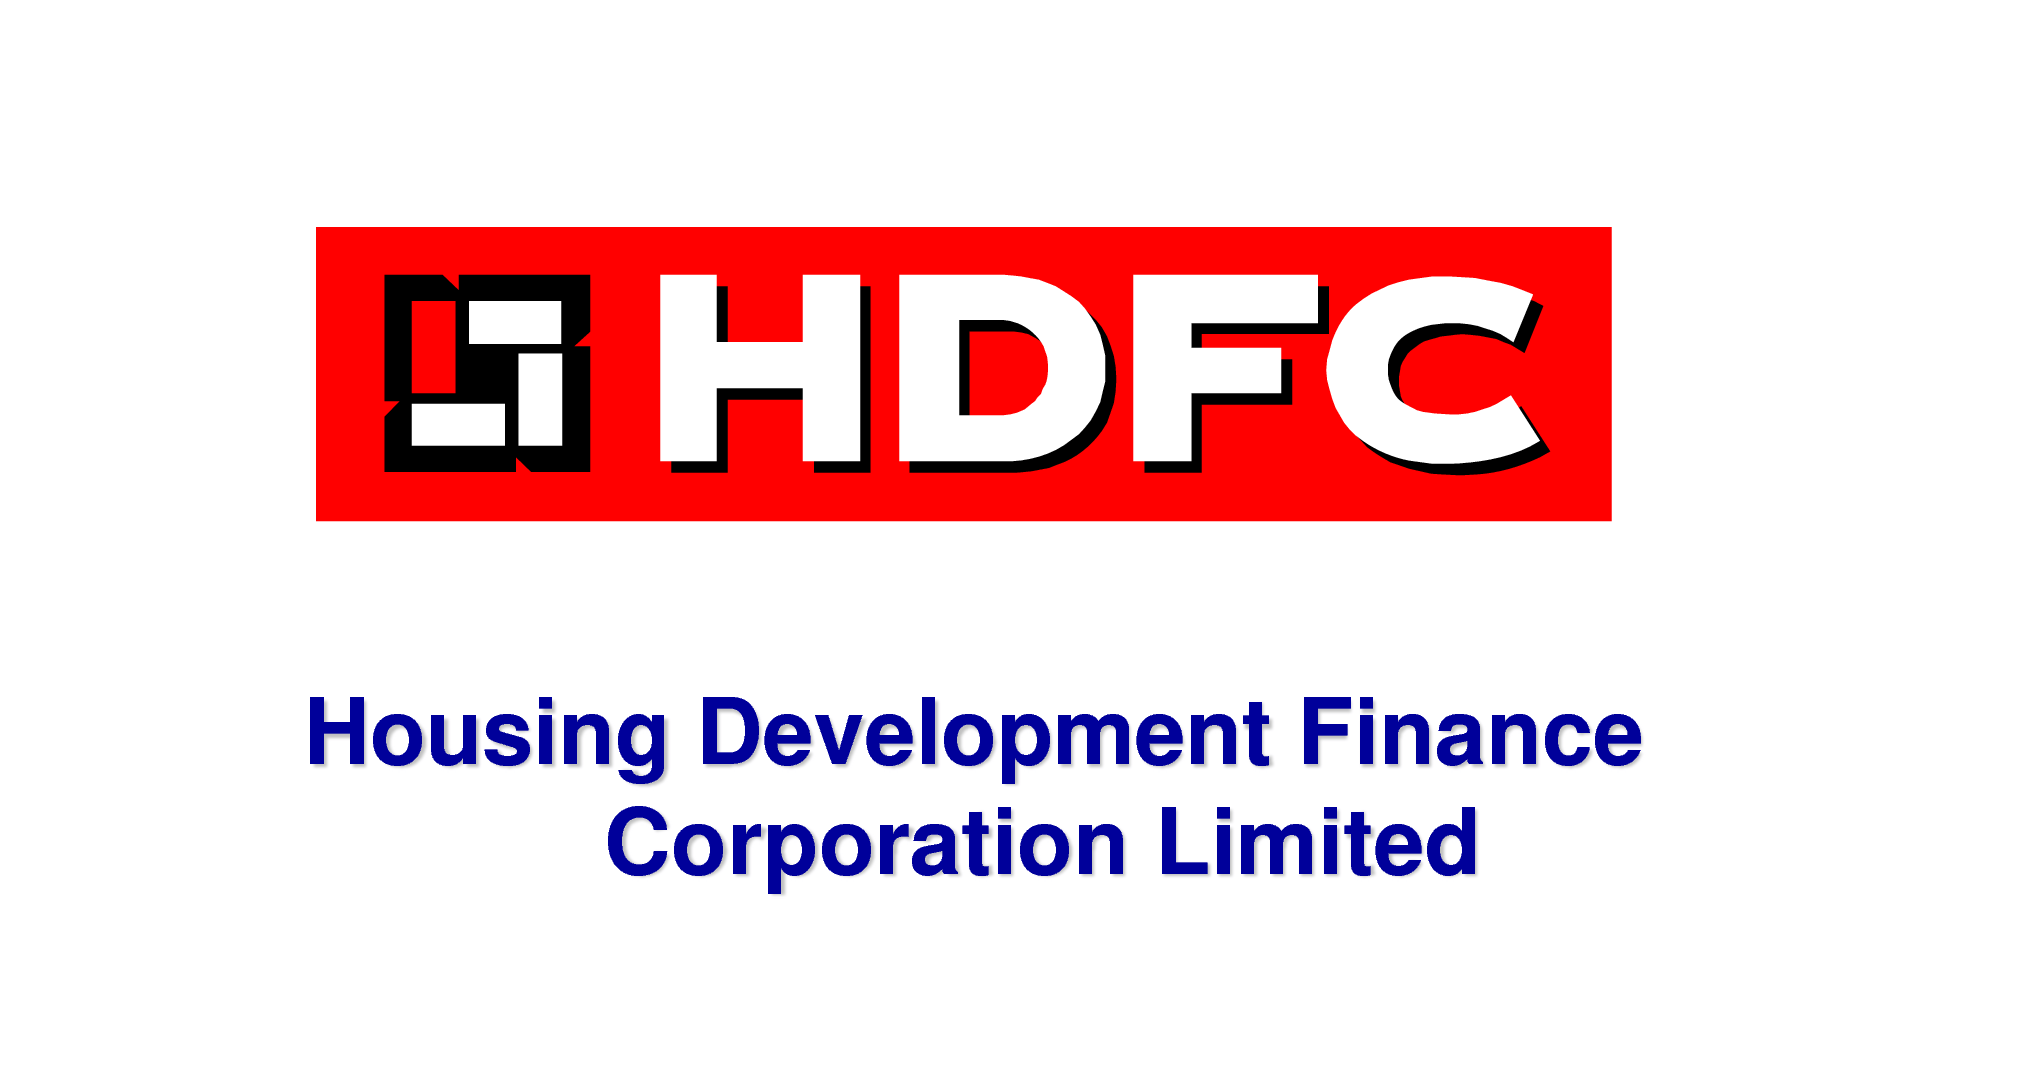 Housing Development Finance Corp Ltd Receives Rs. 11,104 Cro